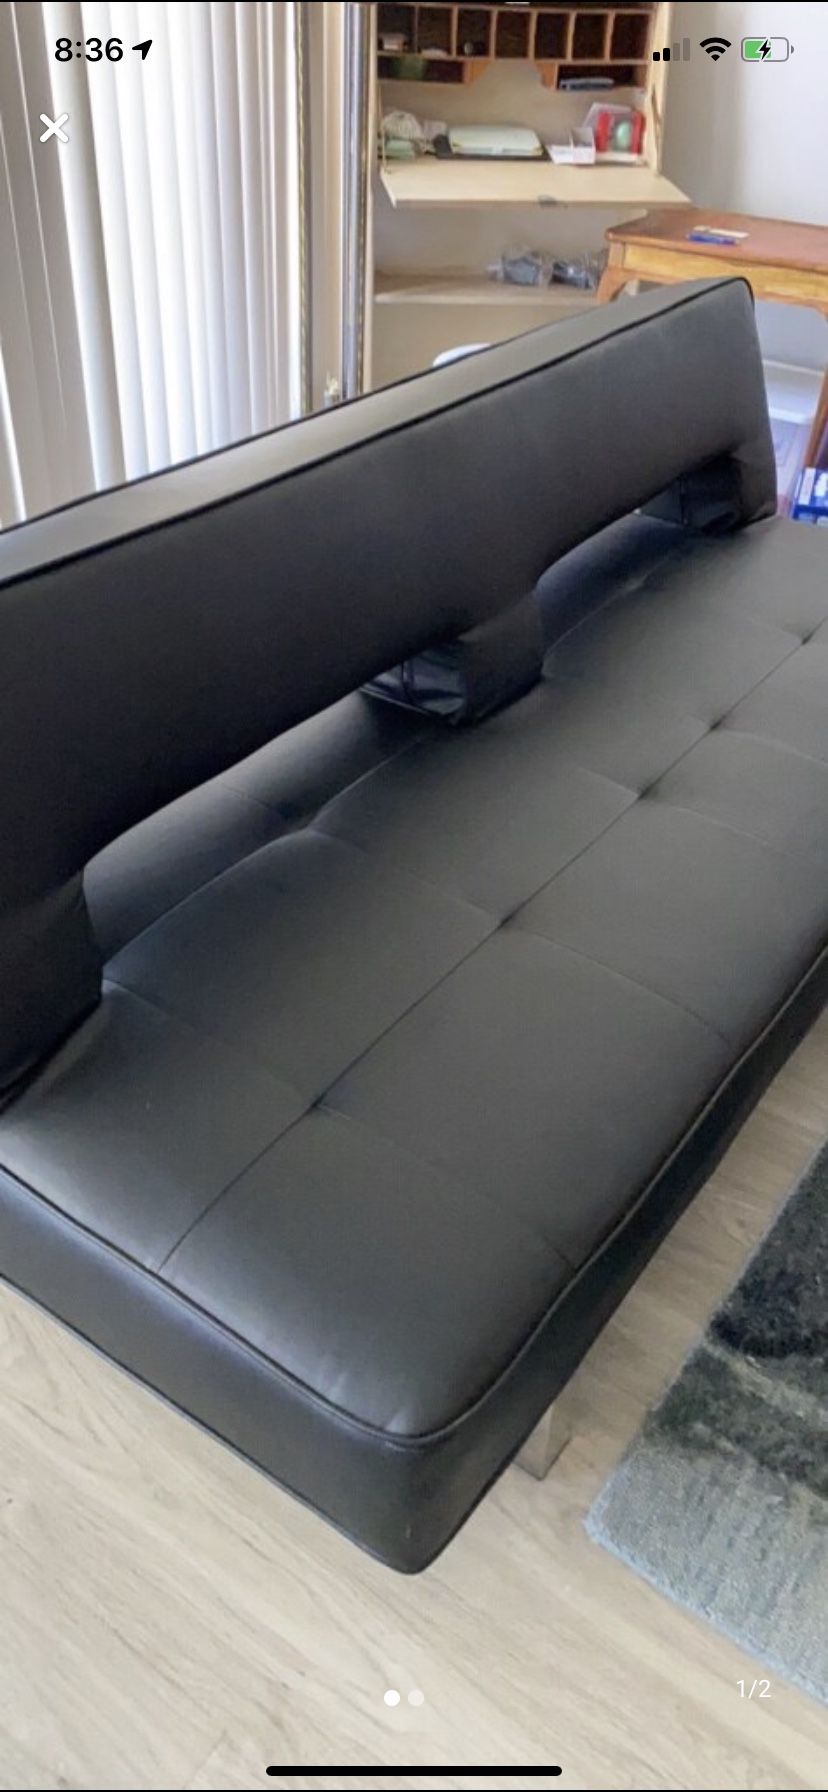 Black leather futon